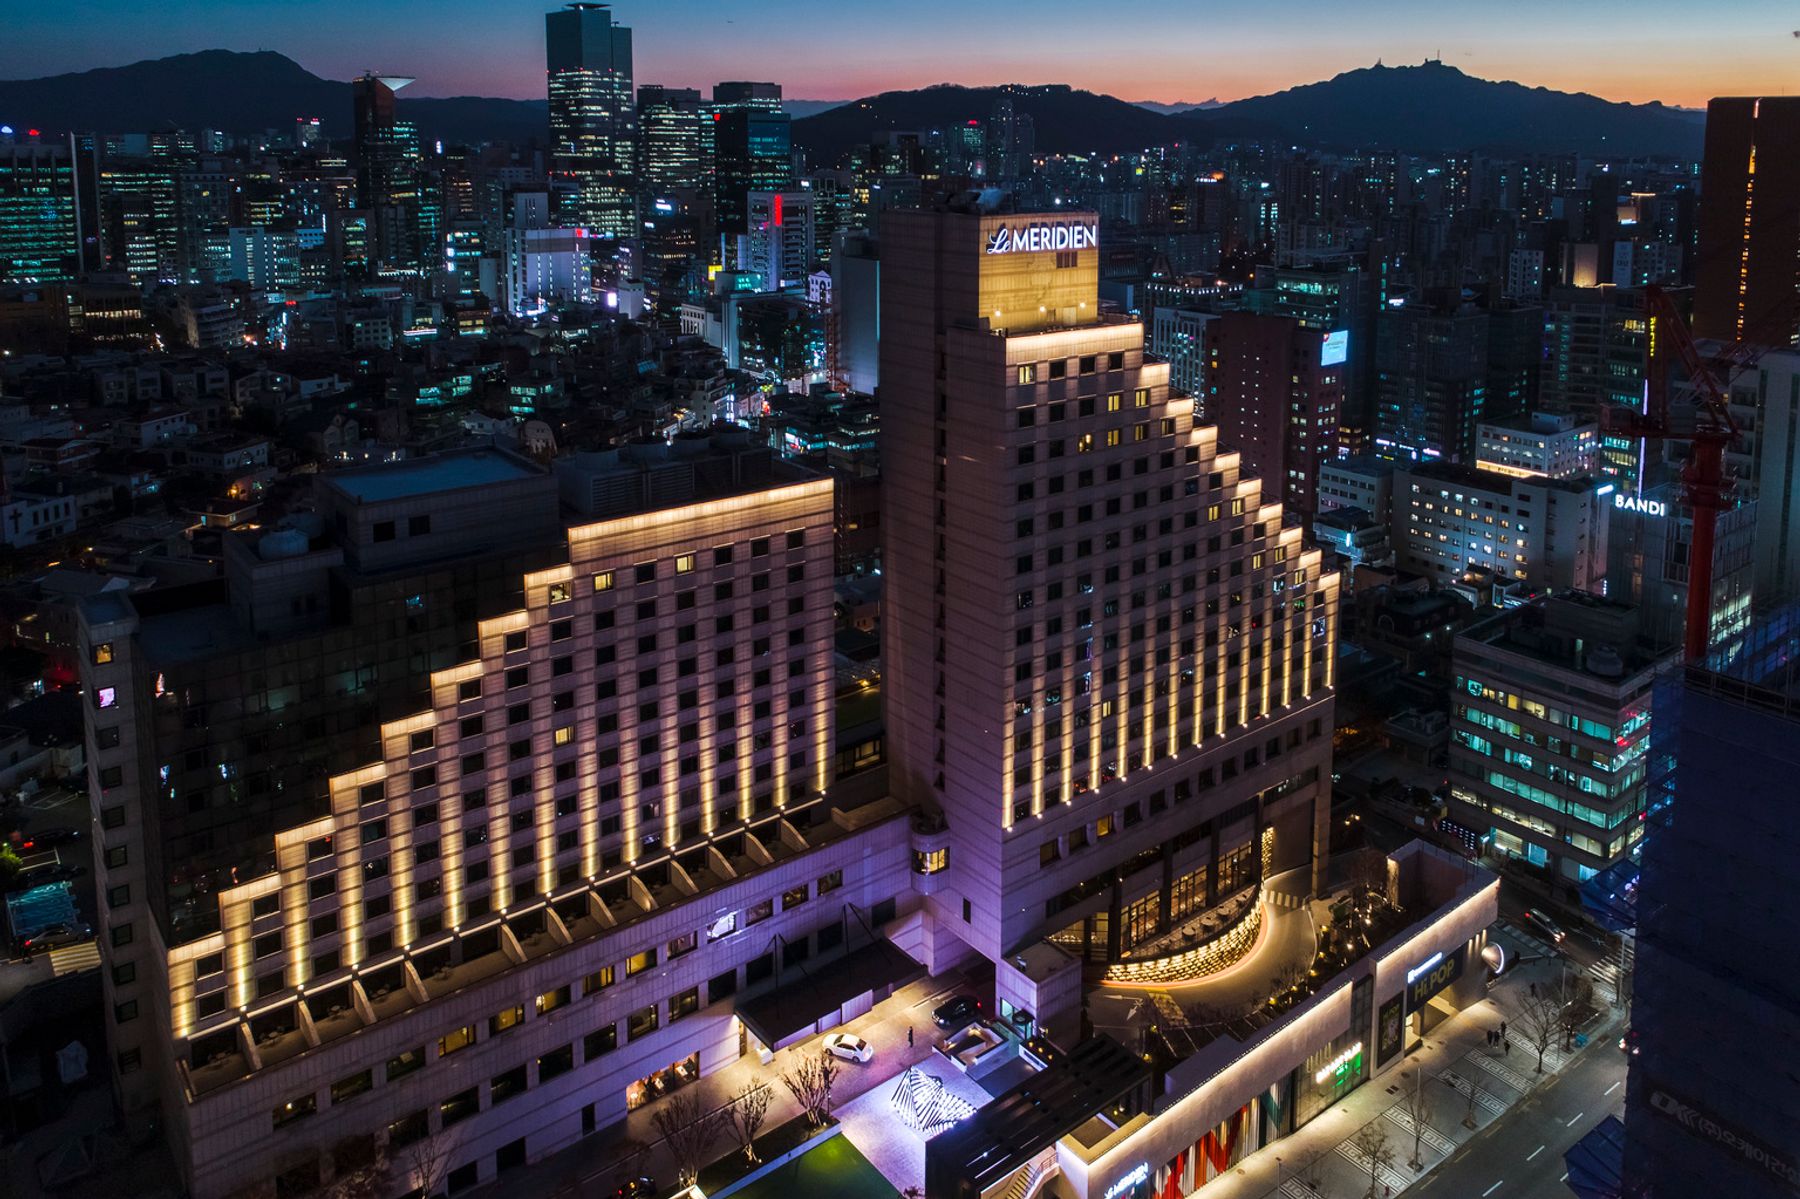 Hotel Le Méridien, Seoul Inredningsarkitektur: David Collins Studio, London. Ljusplanering: Eon SLD, Seoul. Foto: Jackie Chan, Sydney.